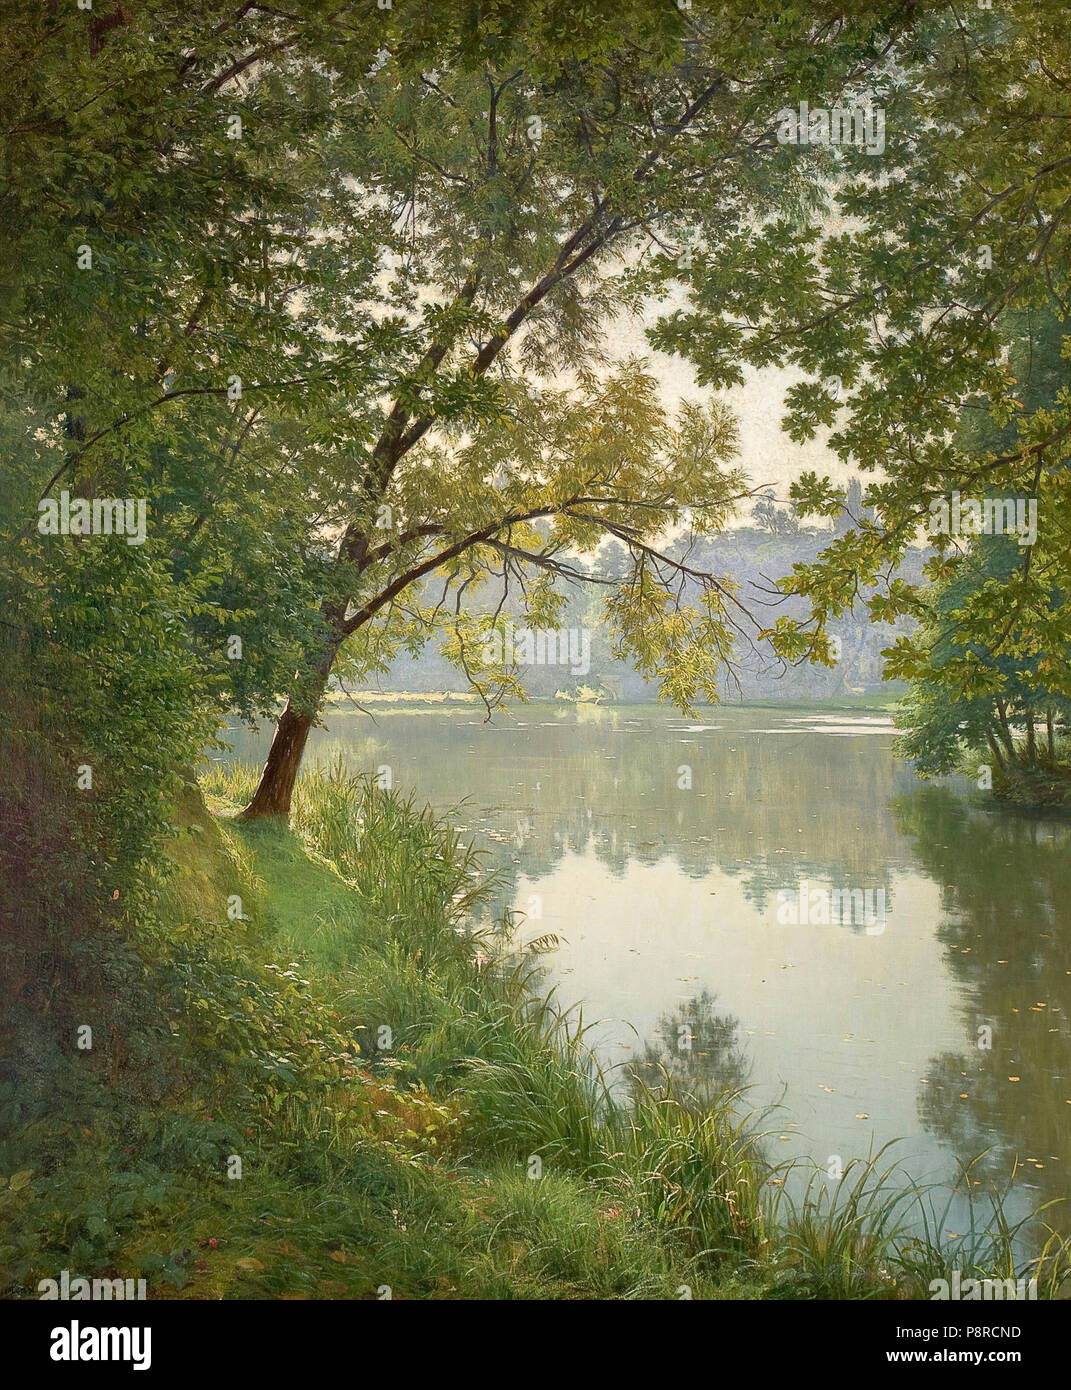 328 Henri BIVA, ca 1905-06, Matin à Villeneuve, Salon 1906 Postkarte - original Gemälde, Öl auf Leinwand, 151,1 x 125,1 cm, Privatsammlung Stockfoto